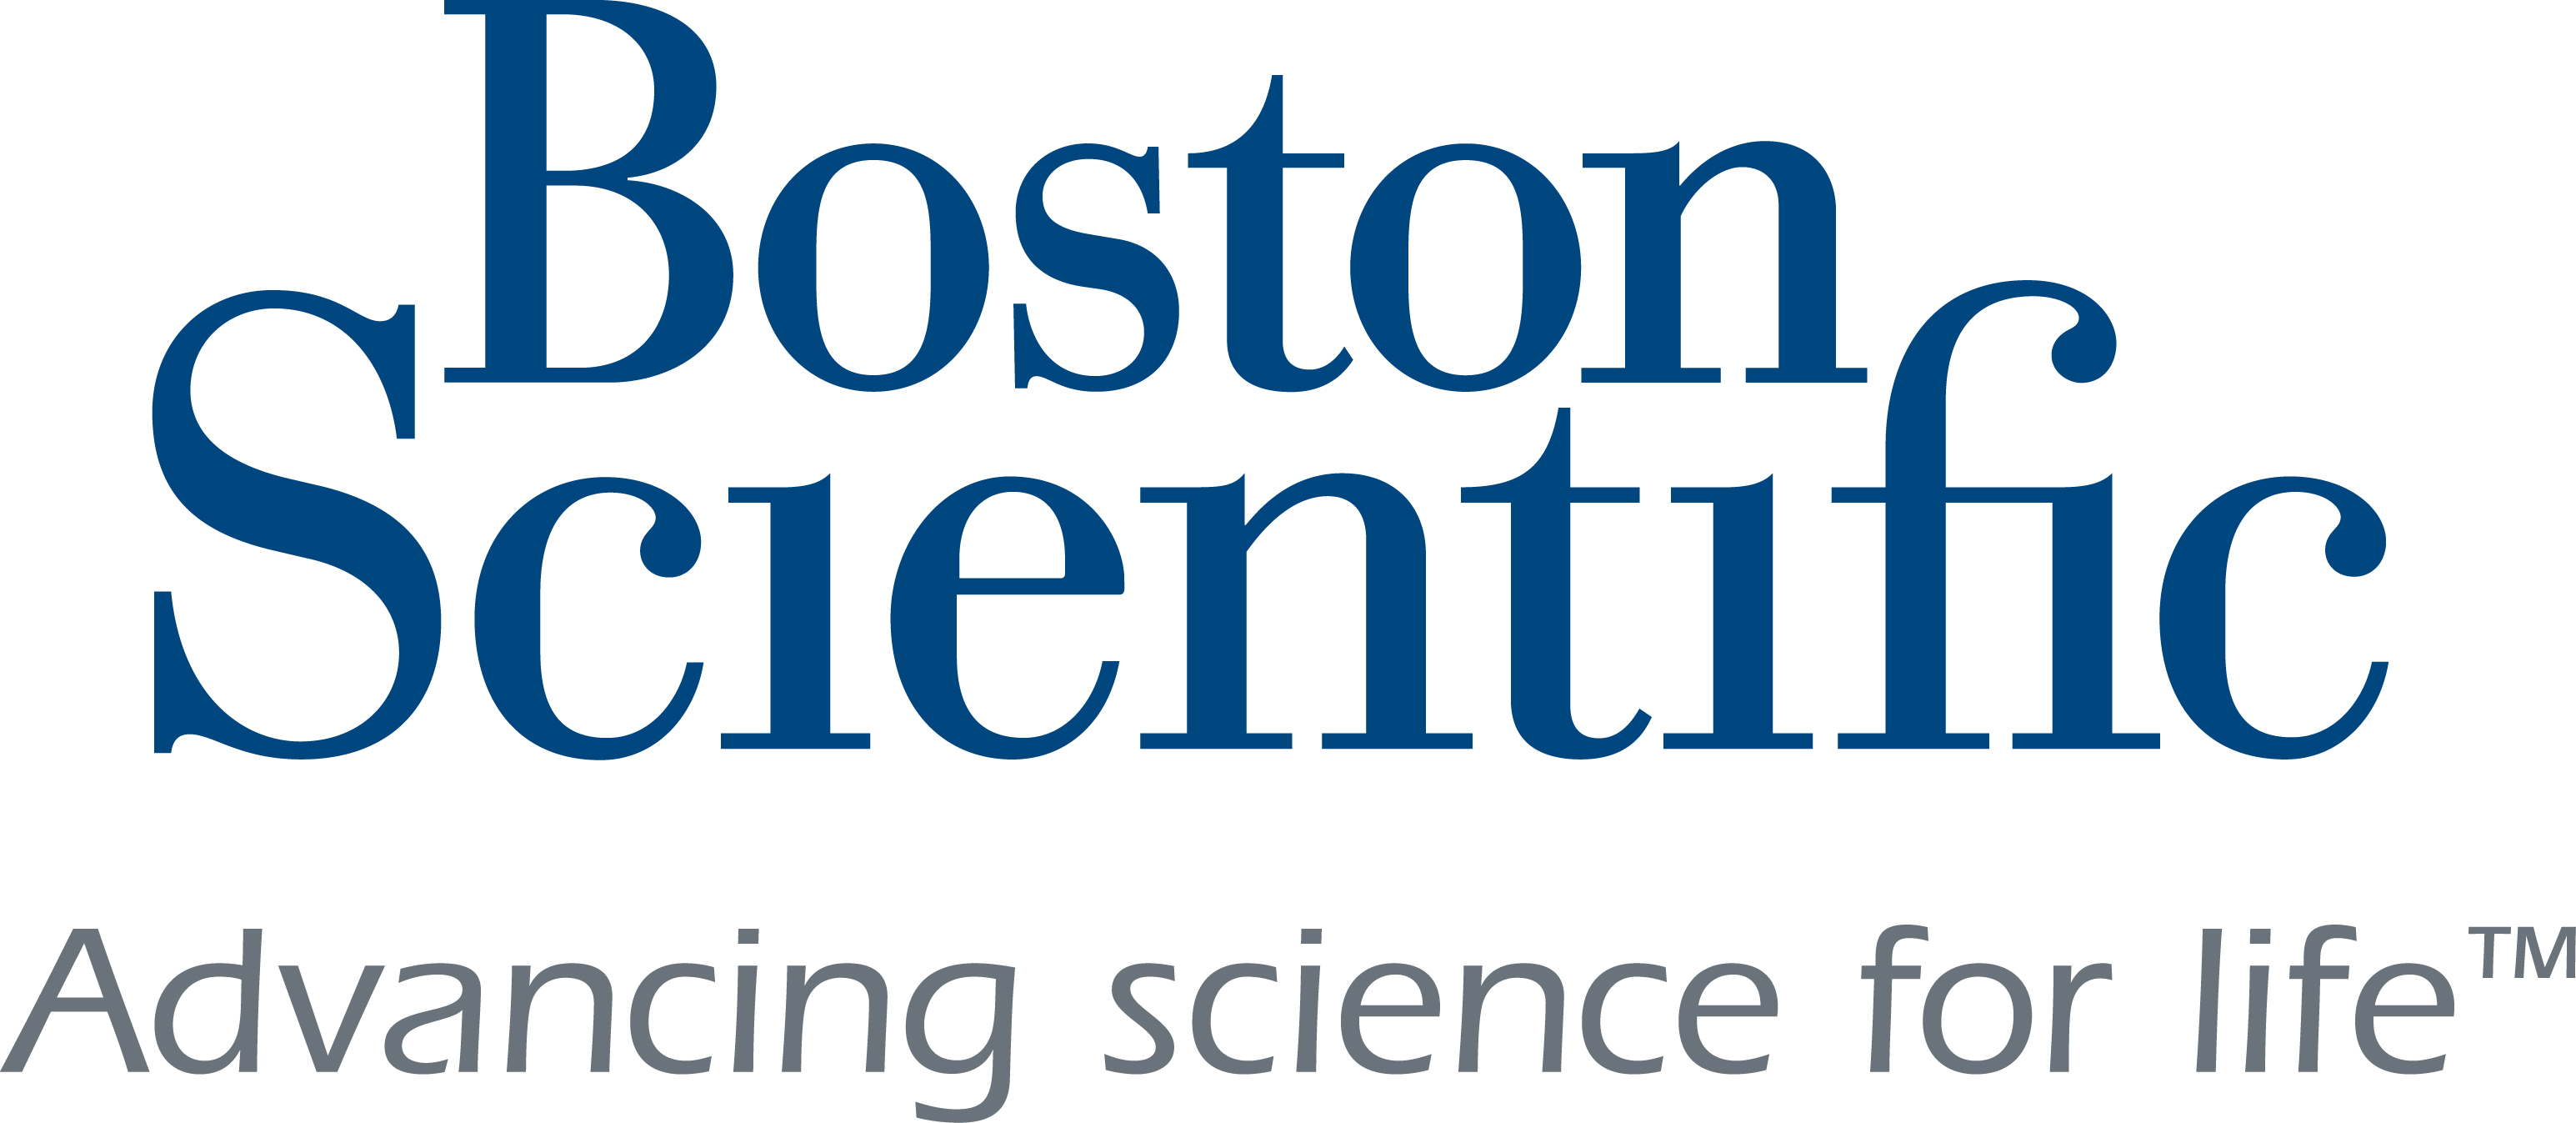 Boston logo_Advancing science for life.jpg